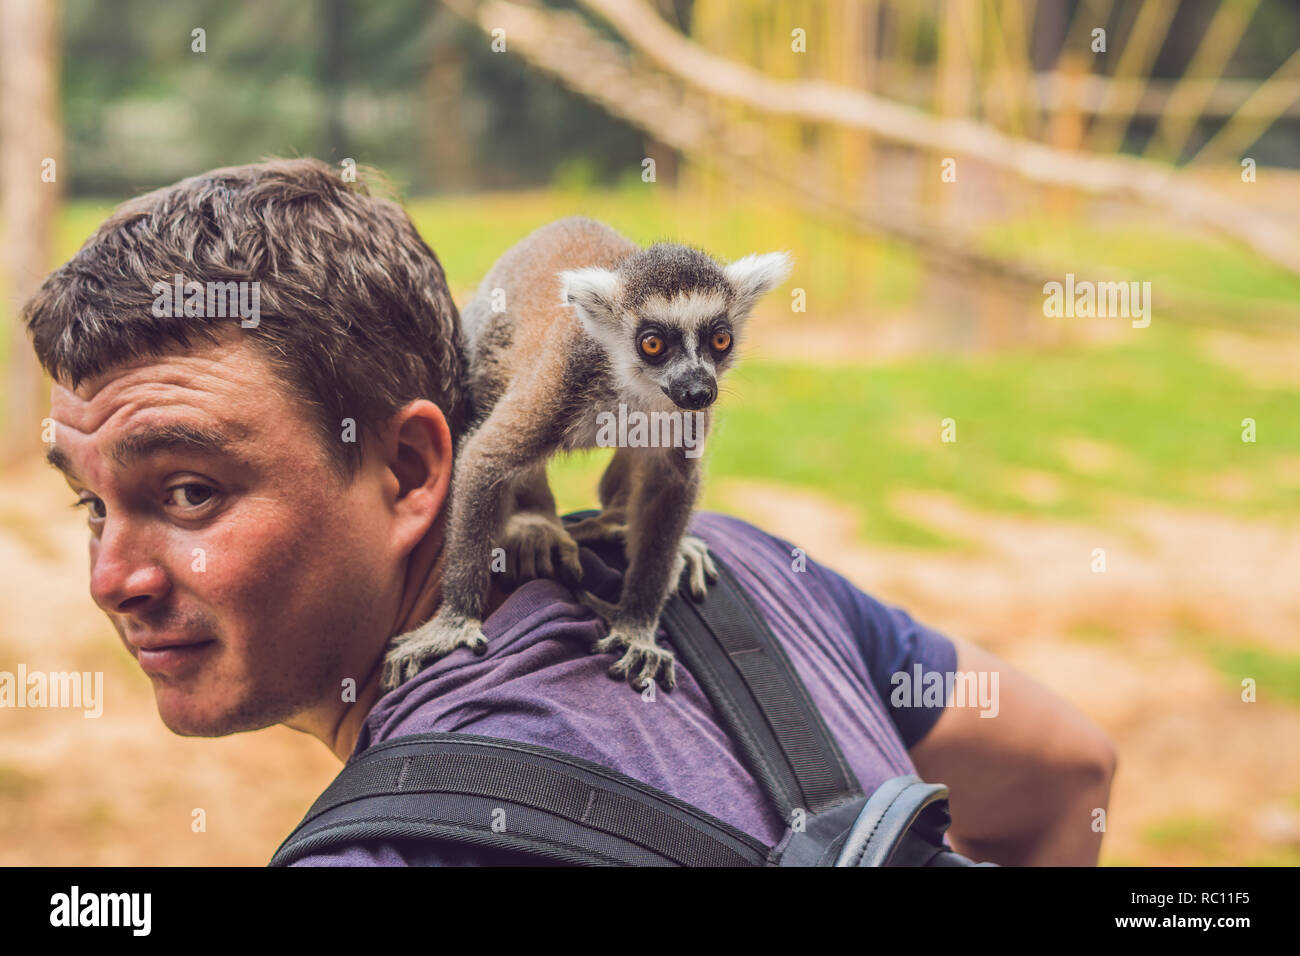 Lemur kletterten auf den Mann. Tier Angriff in den Zoo. Stockfoto